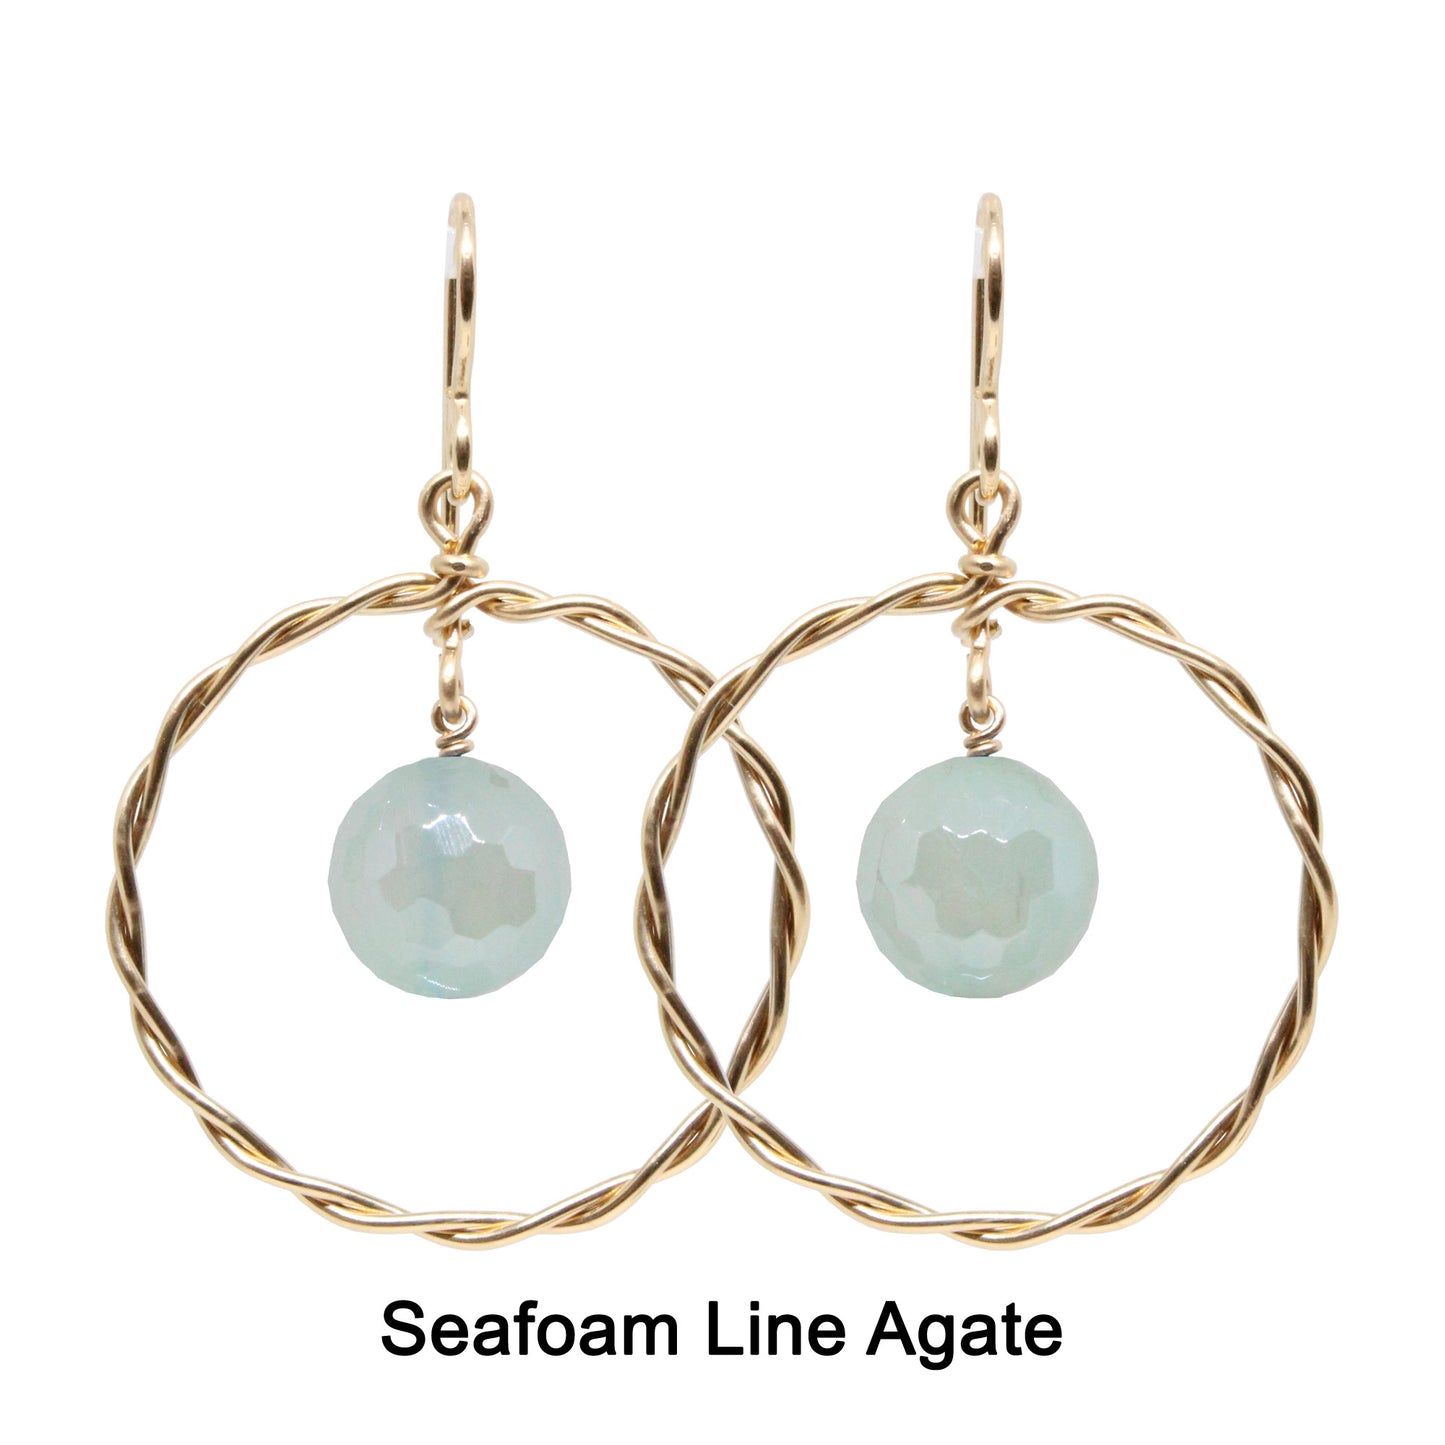 Twisted Wire Hoop Earrings / 45mm length / gold filled hook hook earwires / faceted agate beads / choose from sea blue, seafoam or purple